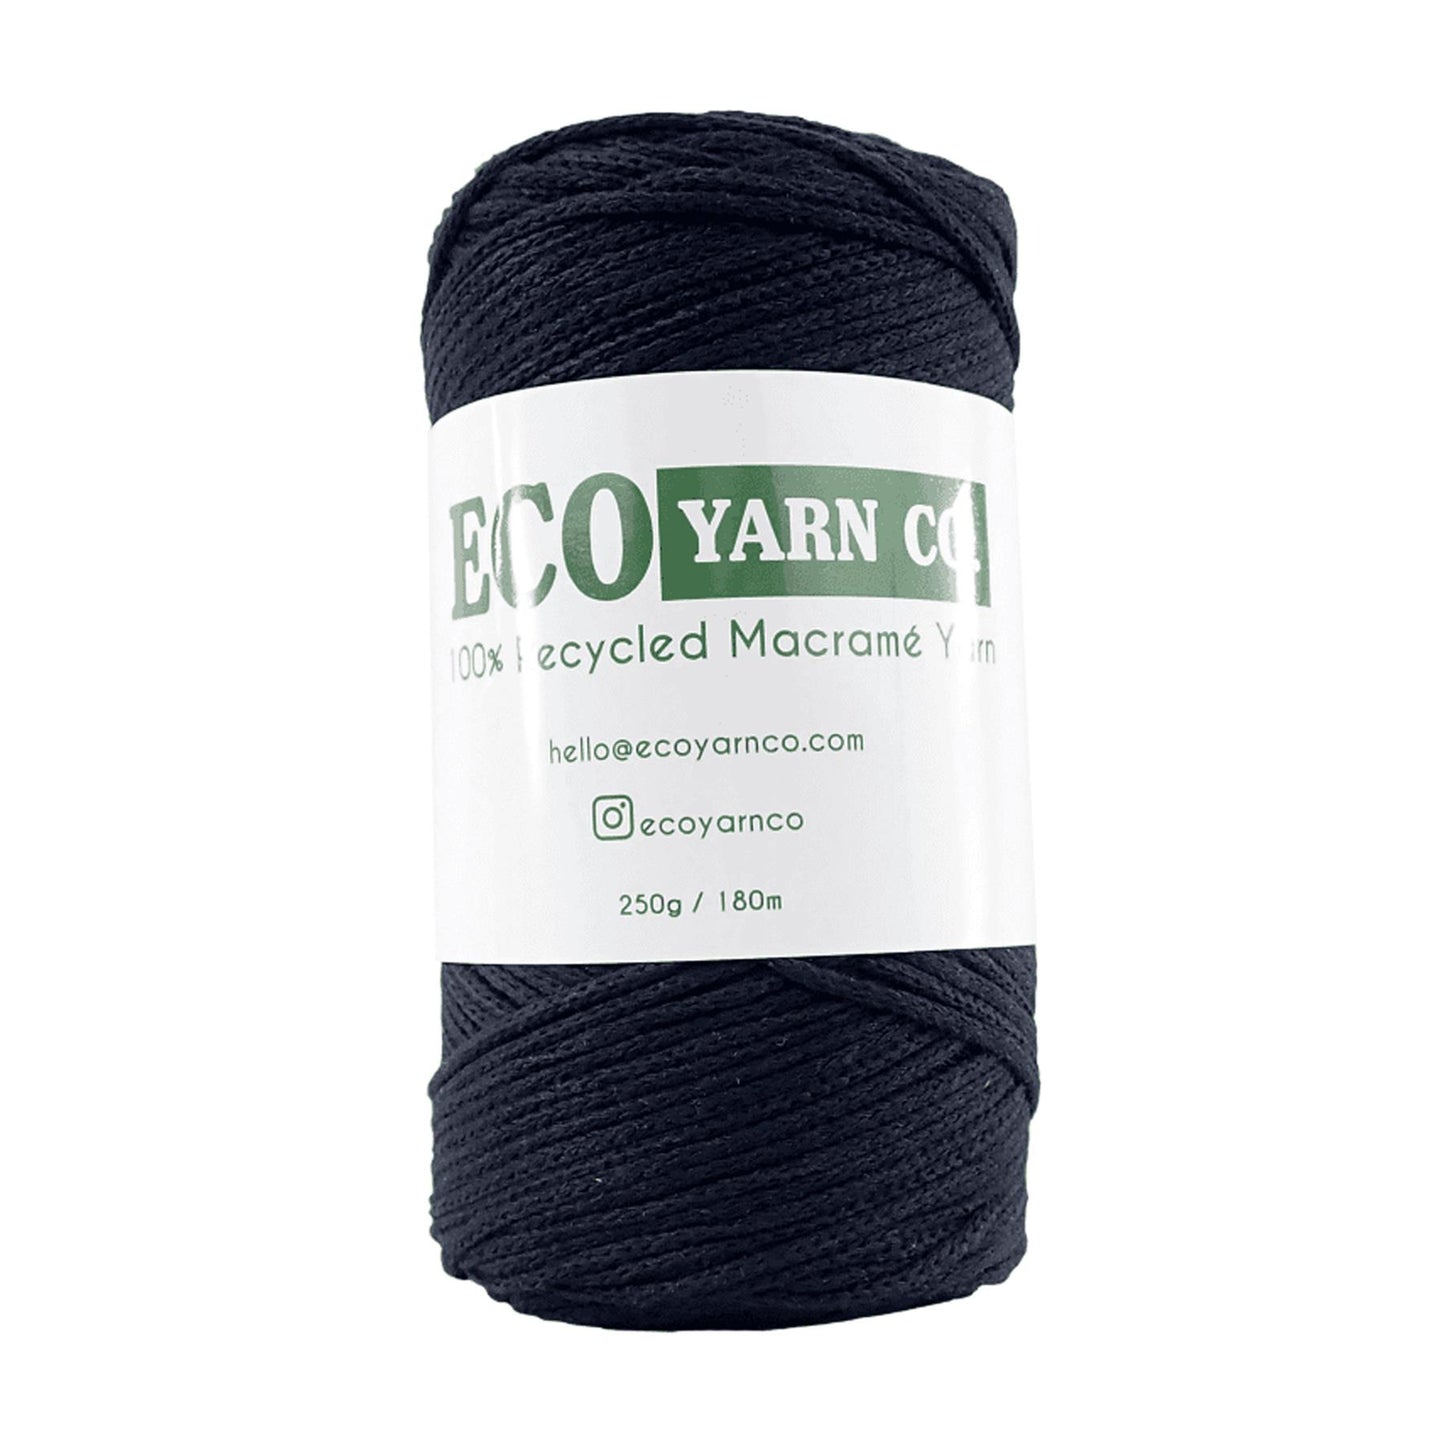 [Eco Yarn Co] Black Cotton/Polyester Macrame Yarn - 180M, 250g